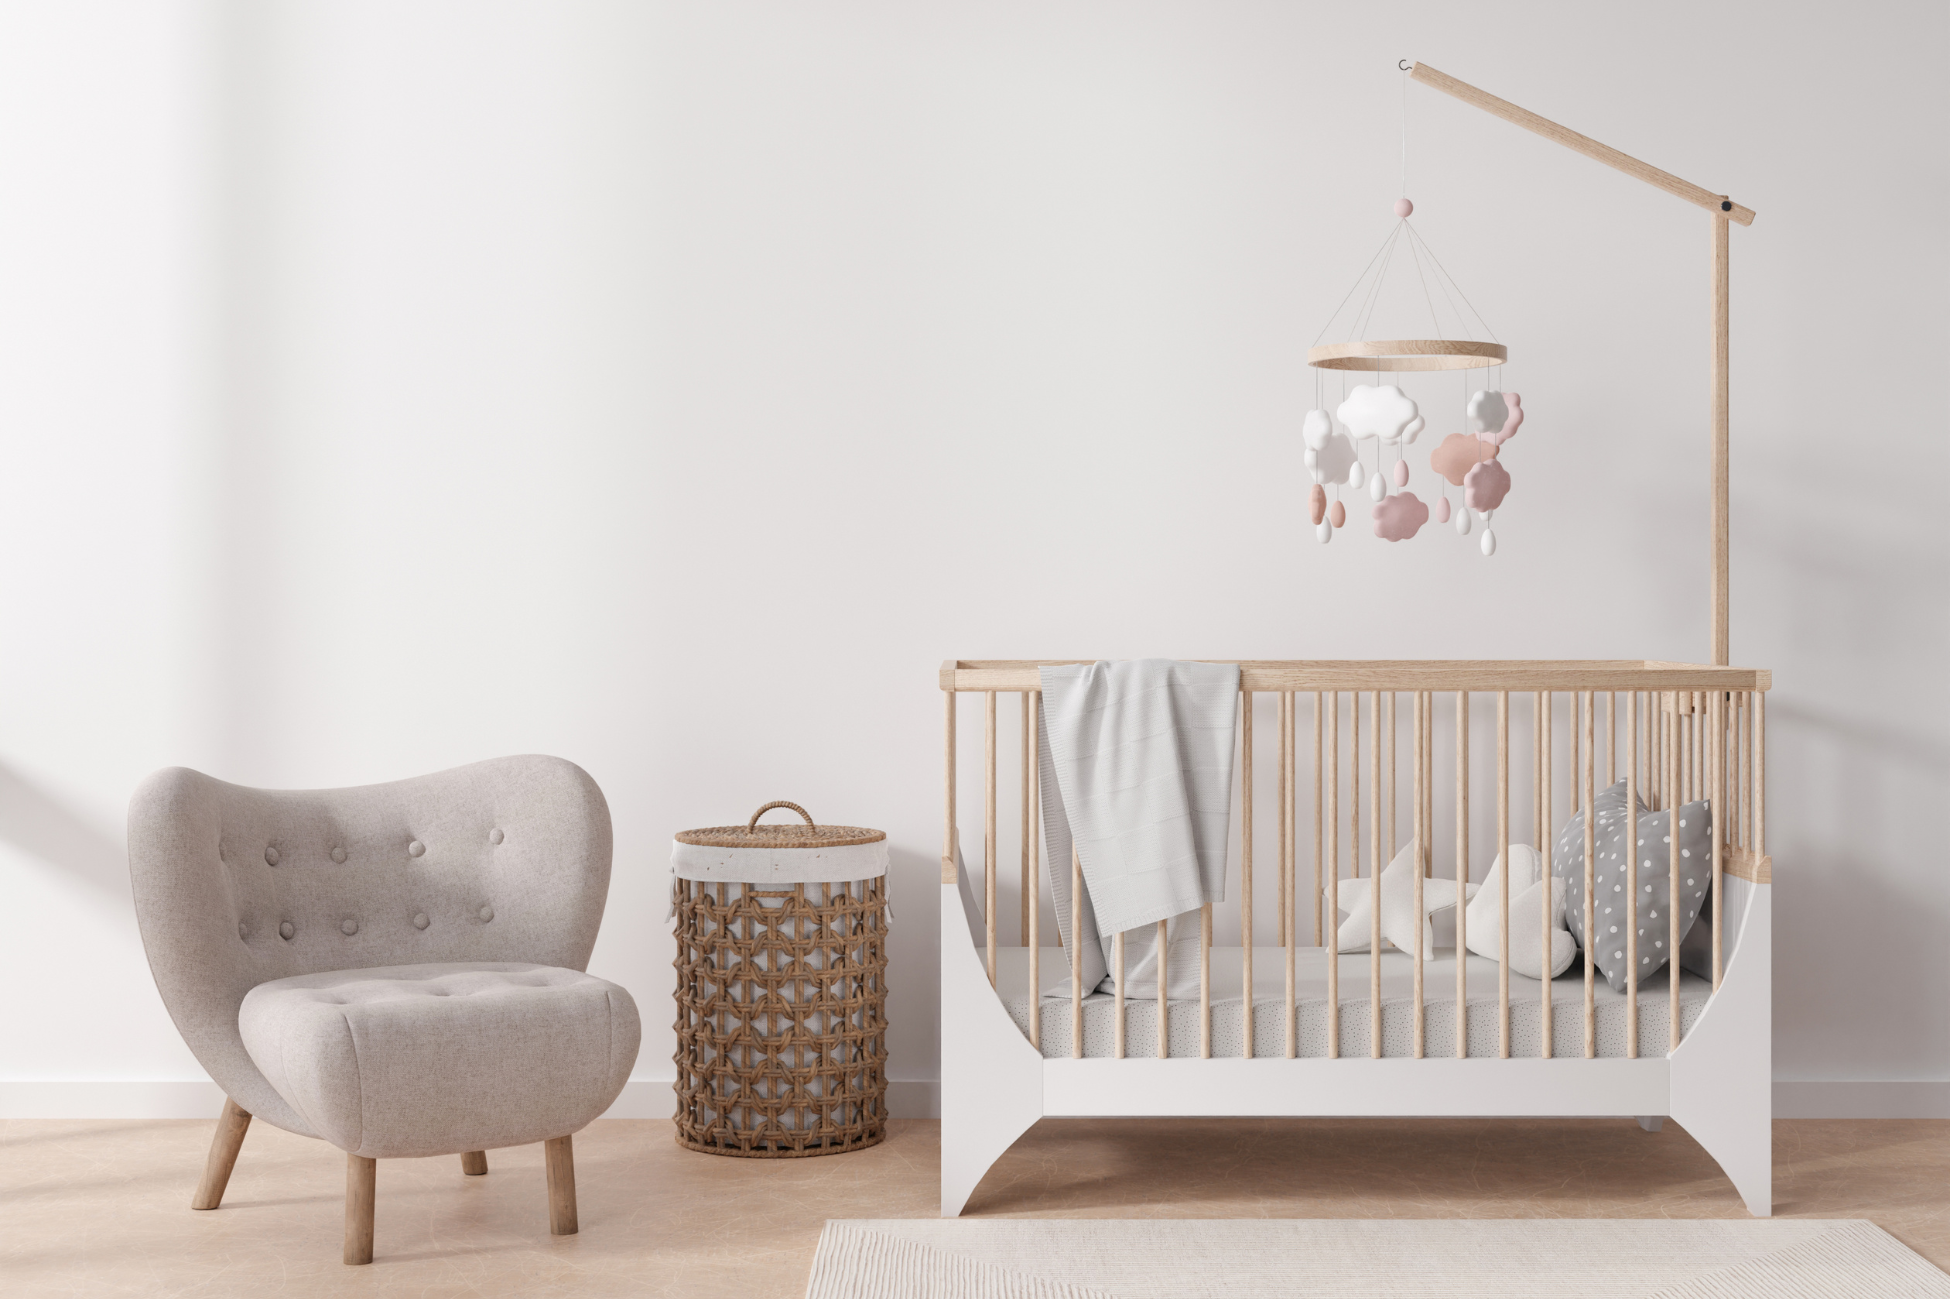 Nursery furniture is important in a baby’s nursery